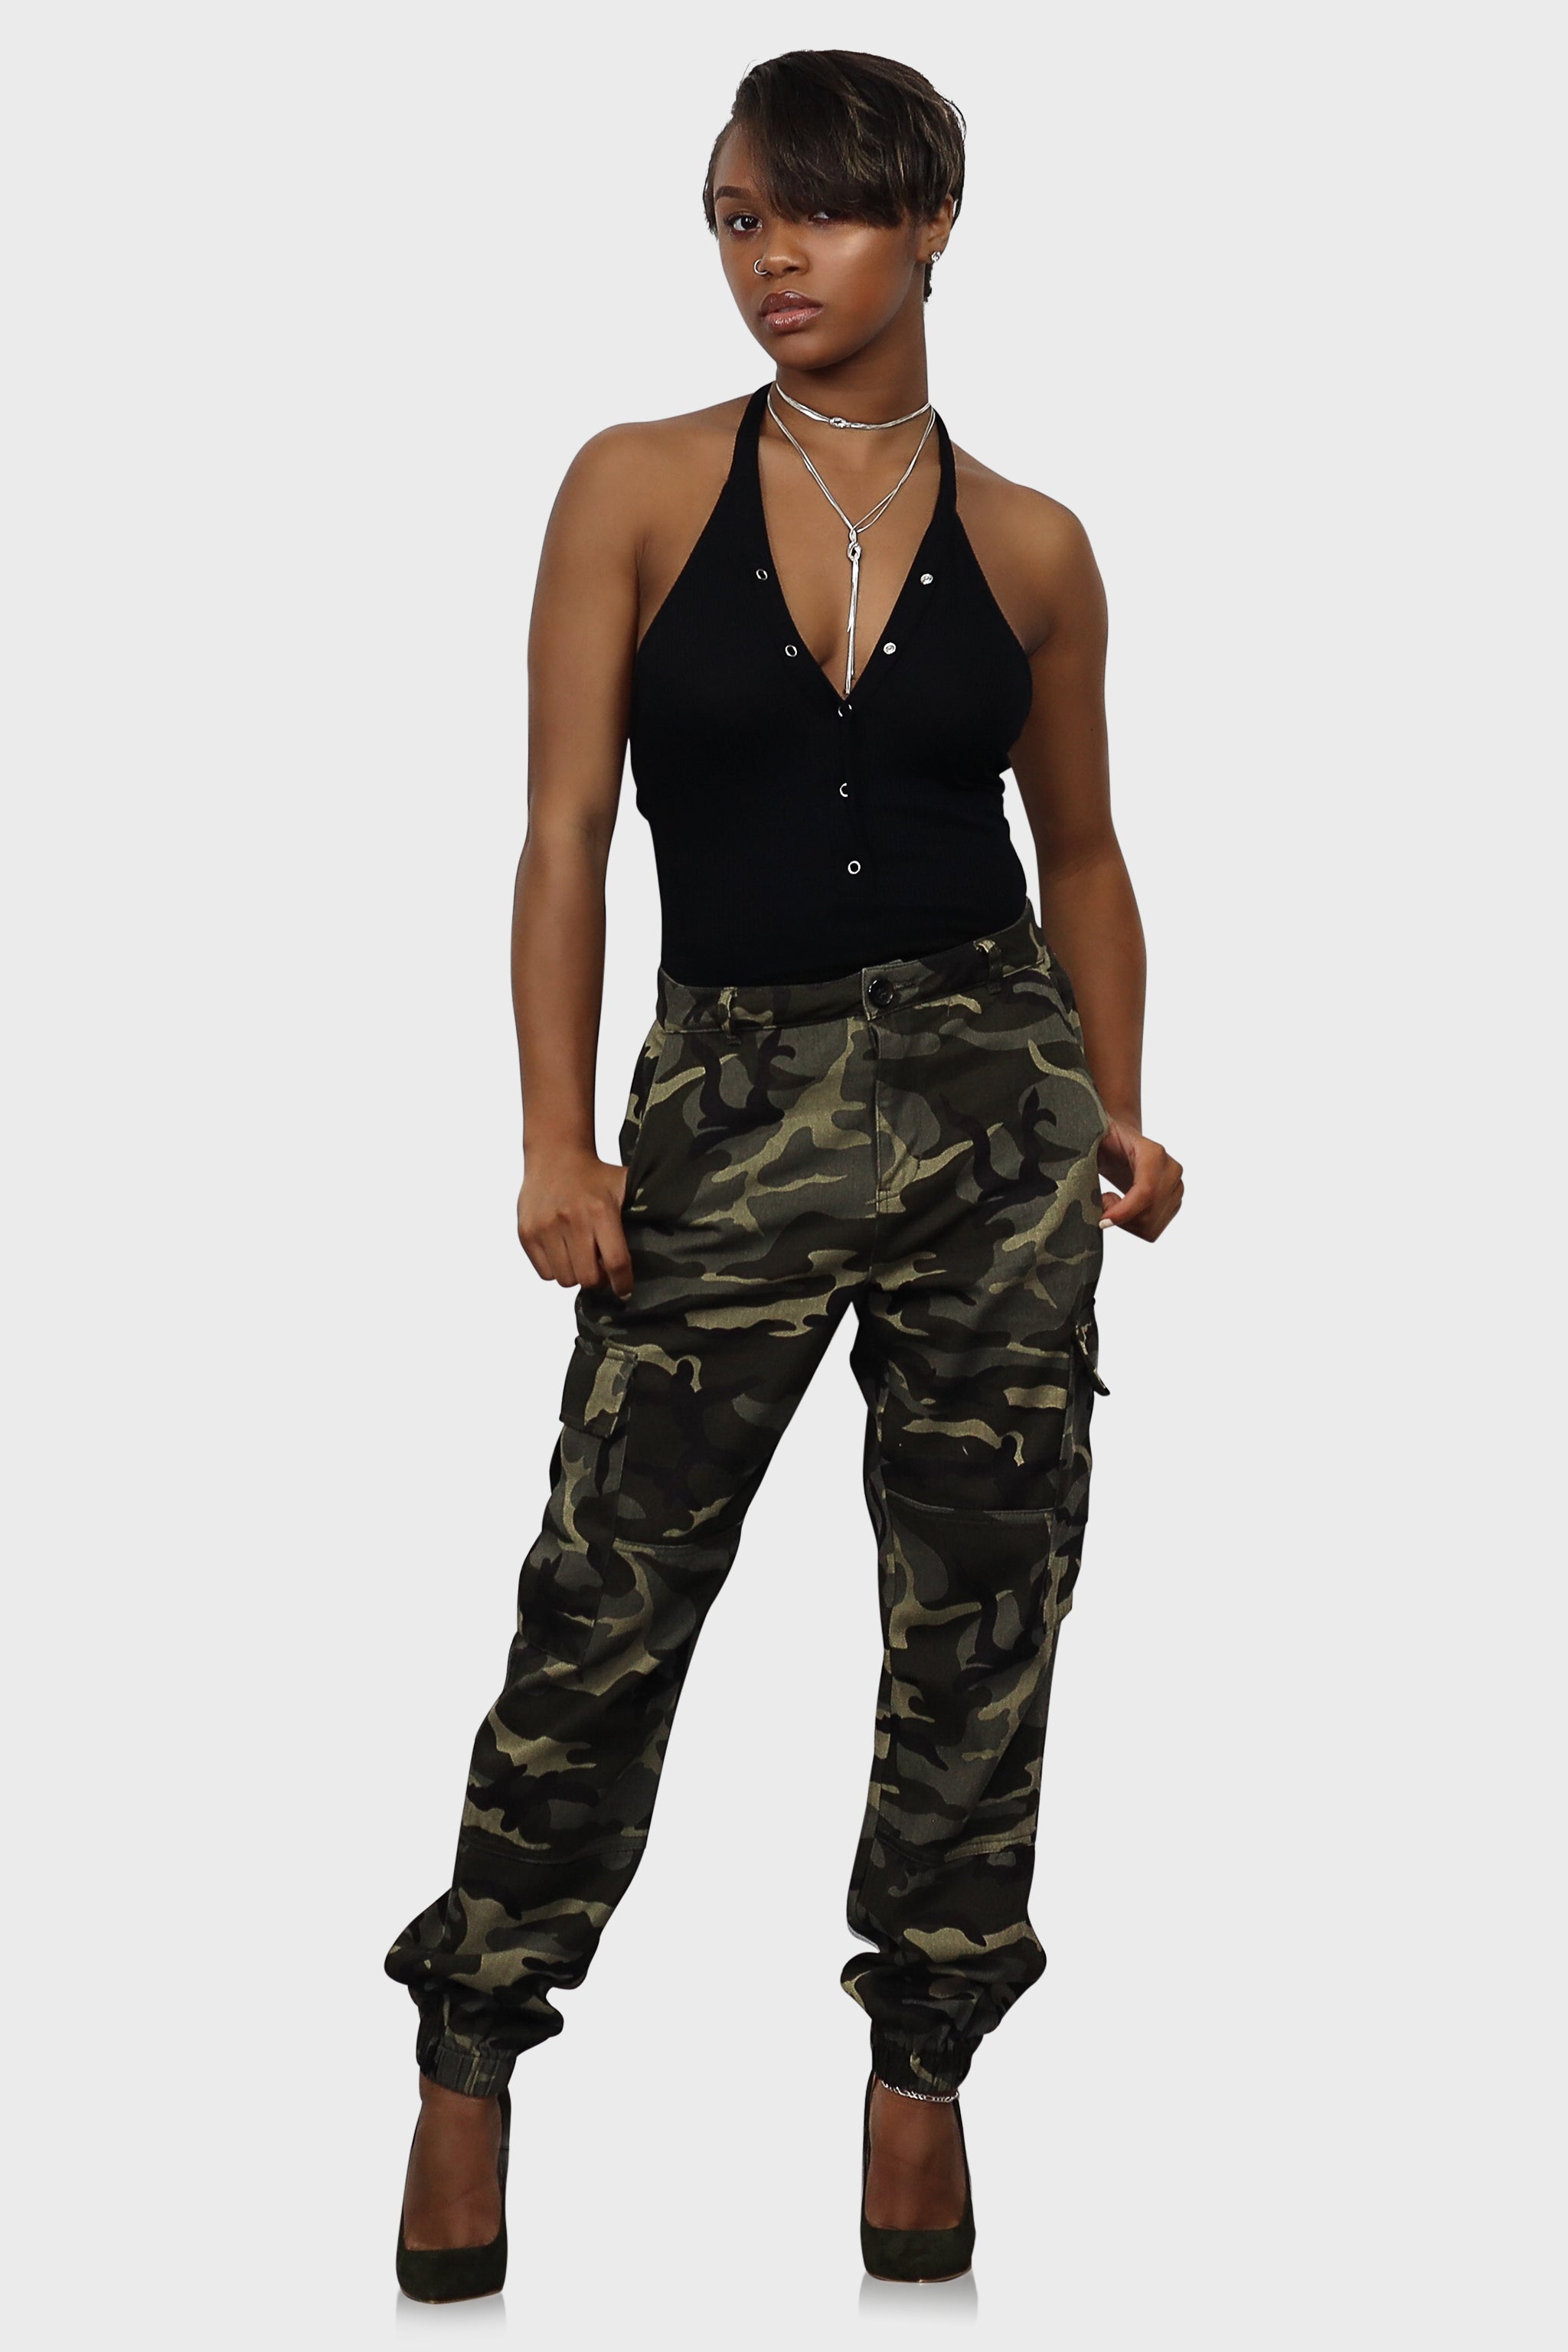 High Waisted Camouflage Cargo Trousers Camo Pants | Camo pants outfit,  White camo pants, Black and white camo pants